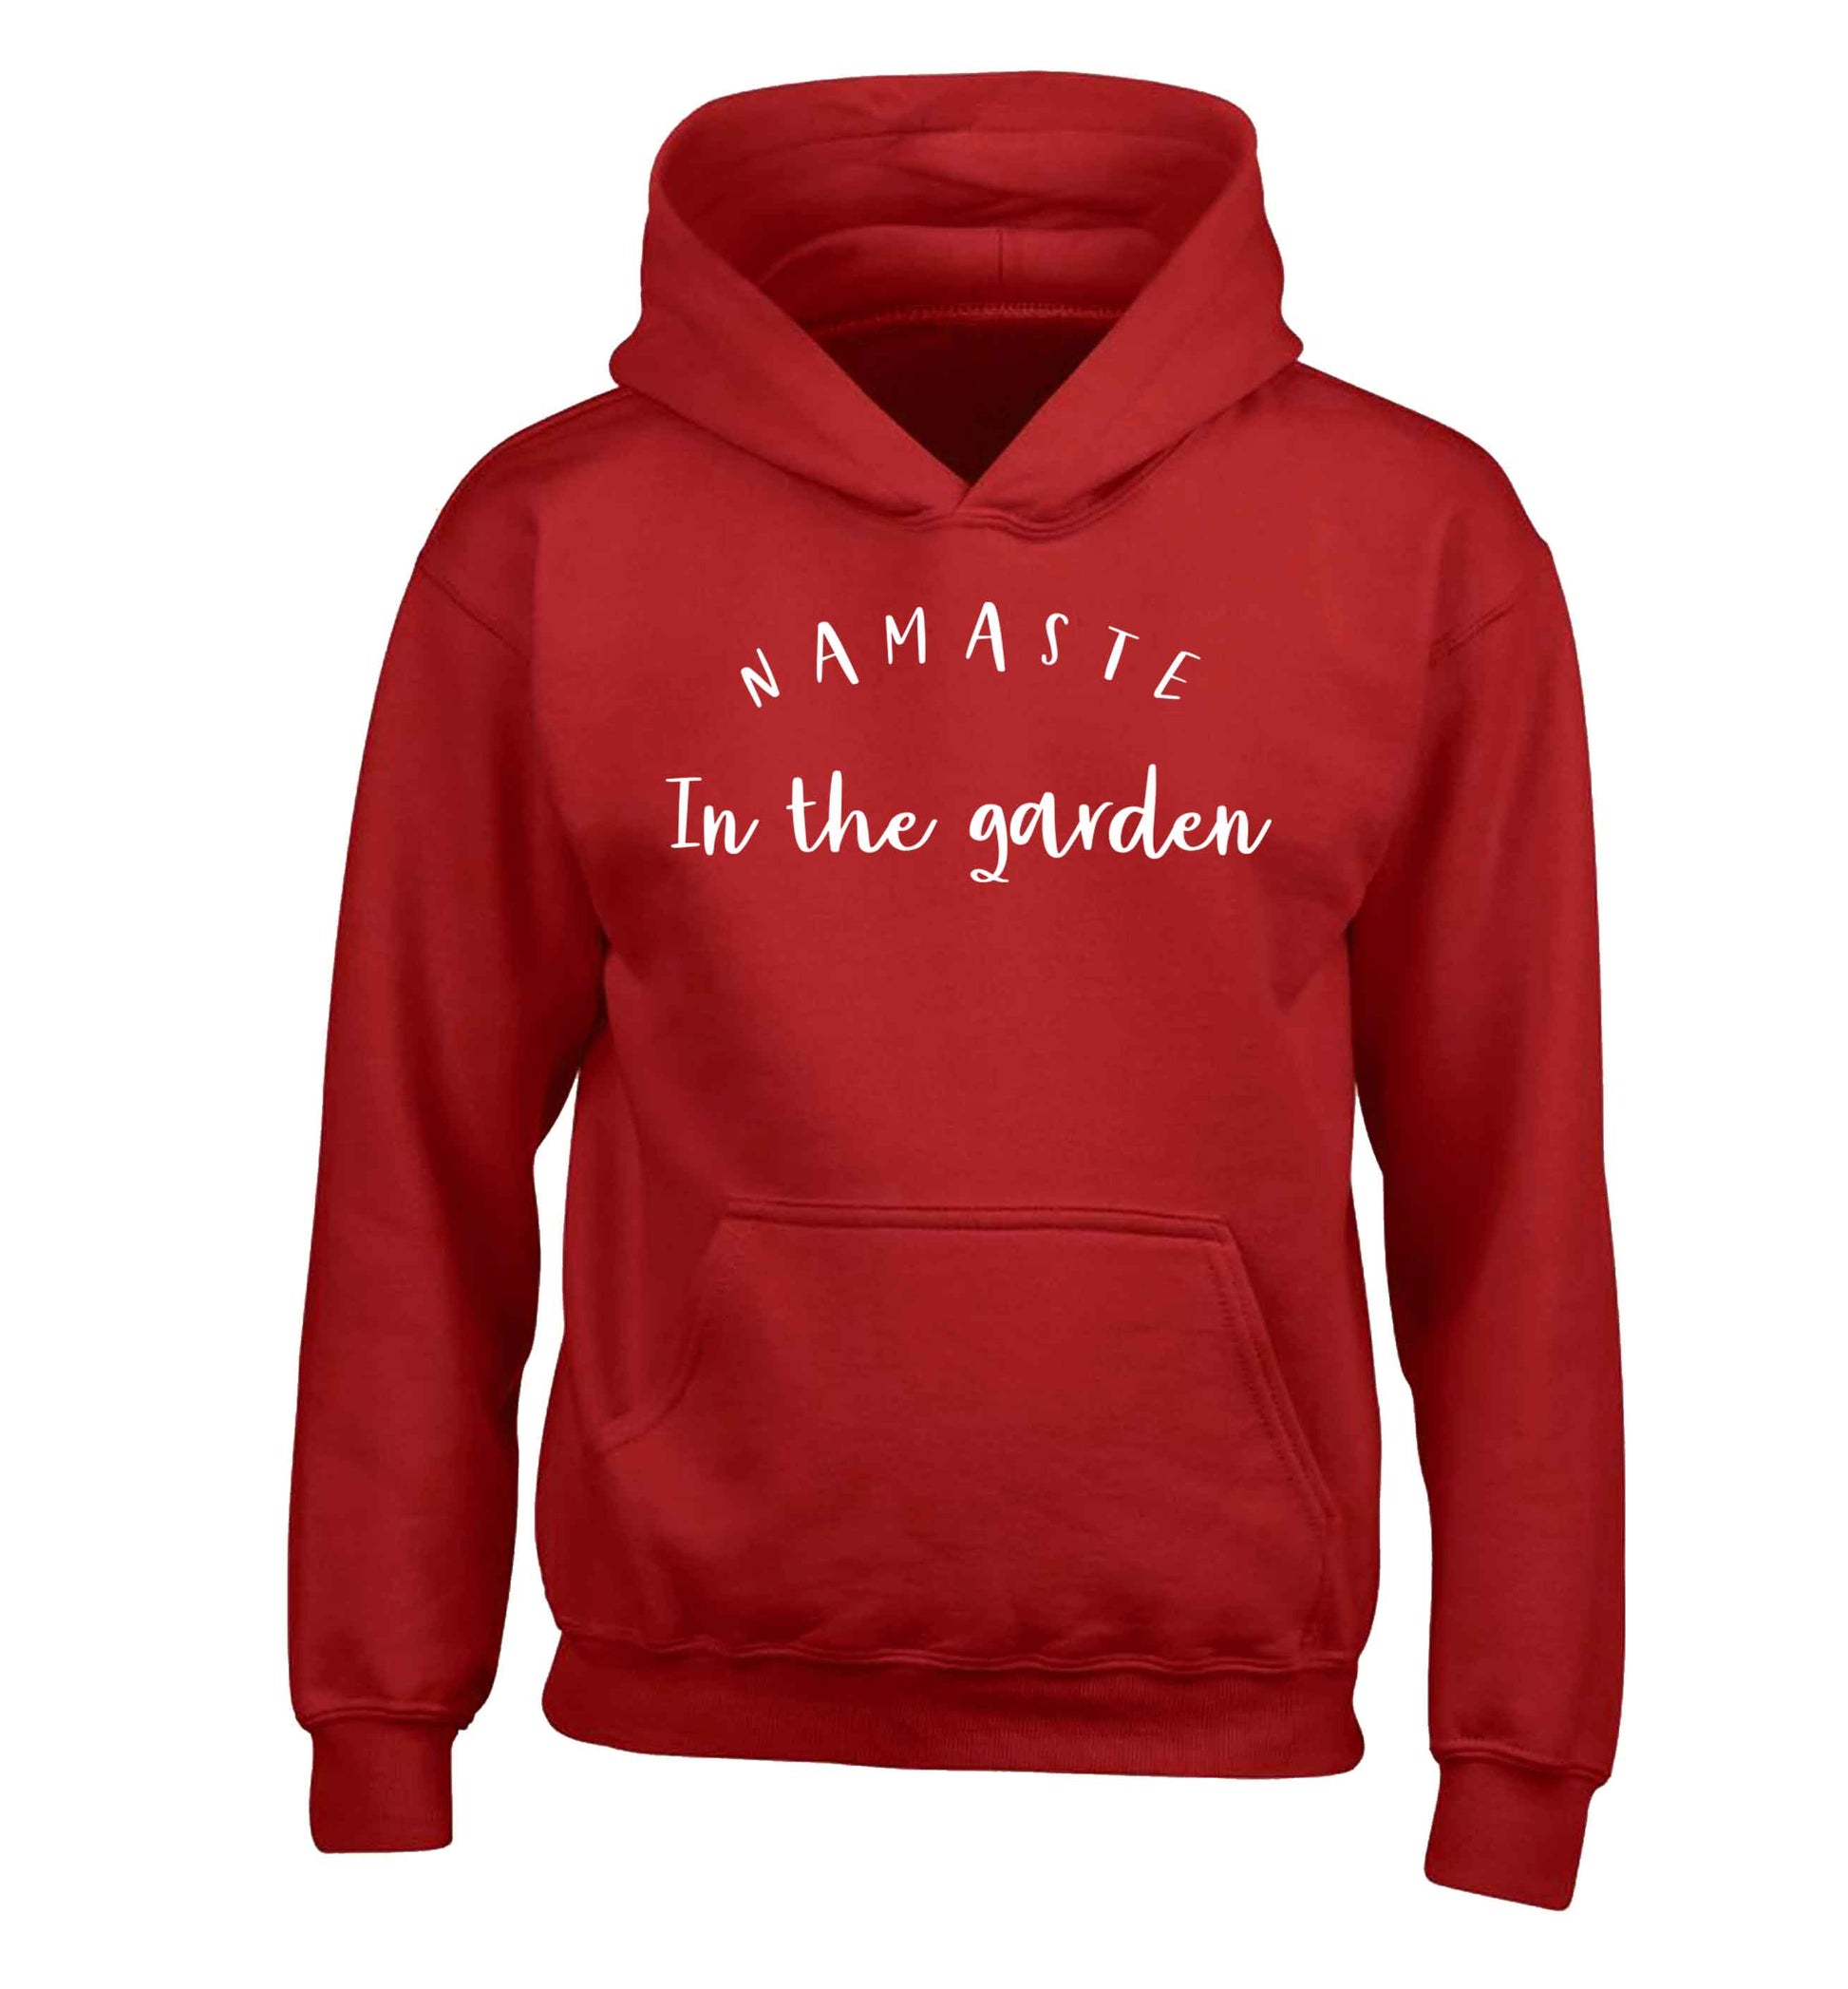 Namaste in the garden children's red hoodie 12-13 Years